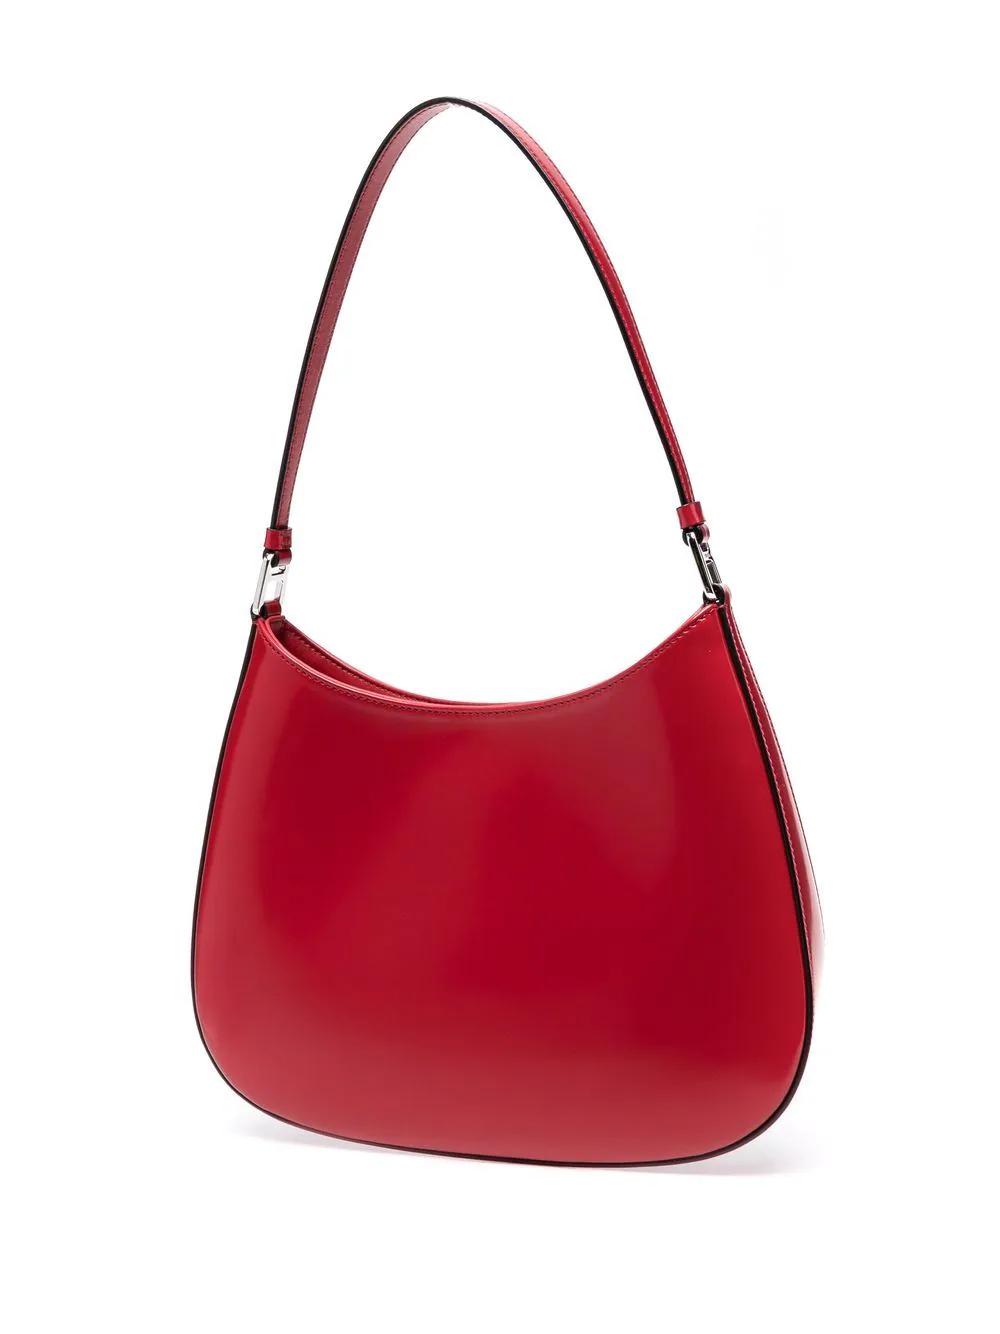 Prada Cleo Brushed-leather Hobo Bag in Red